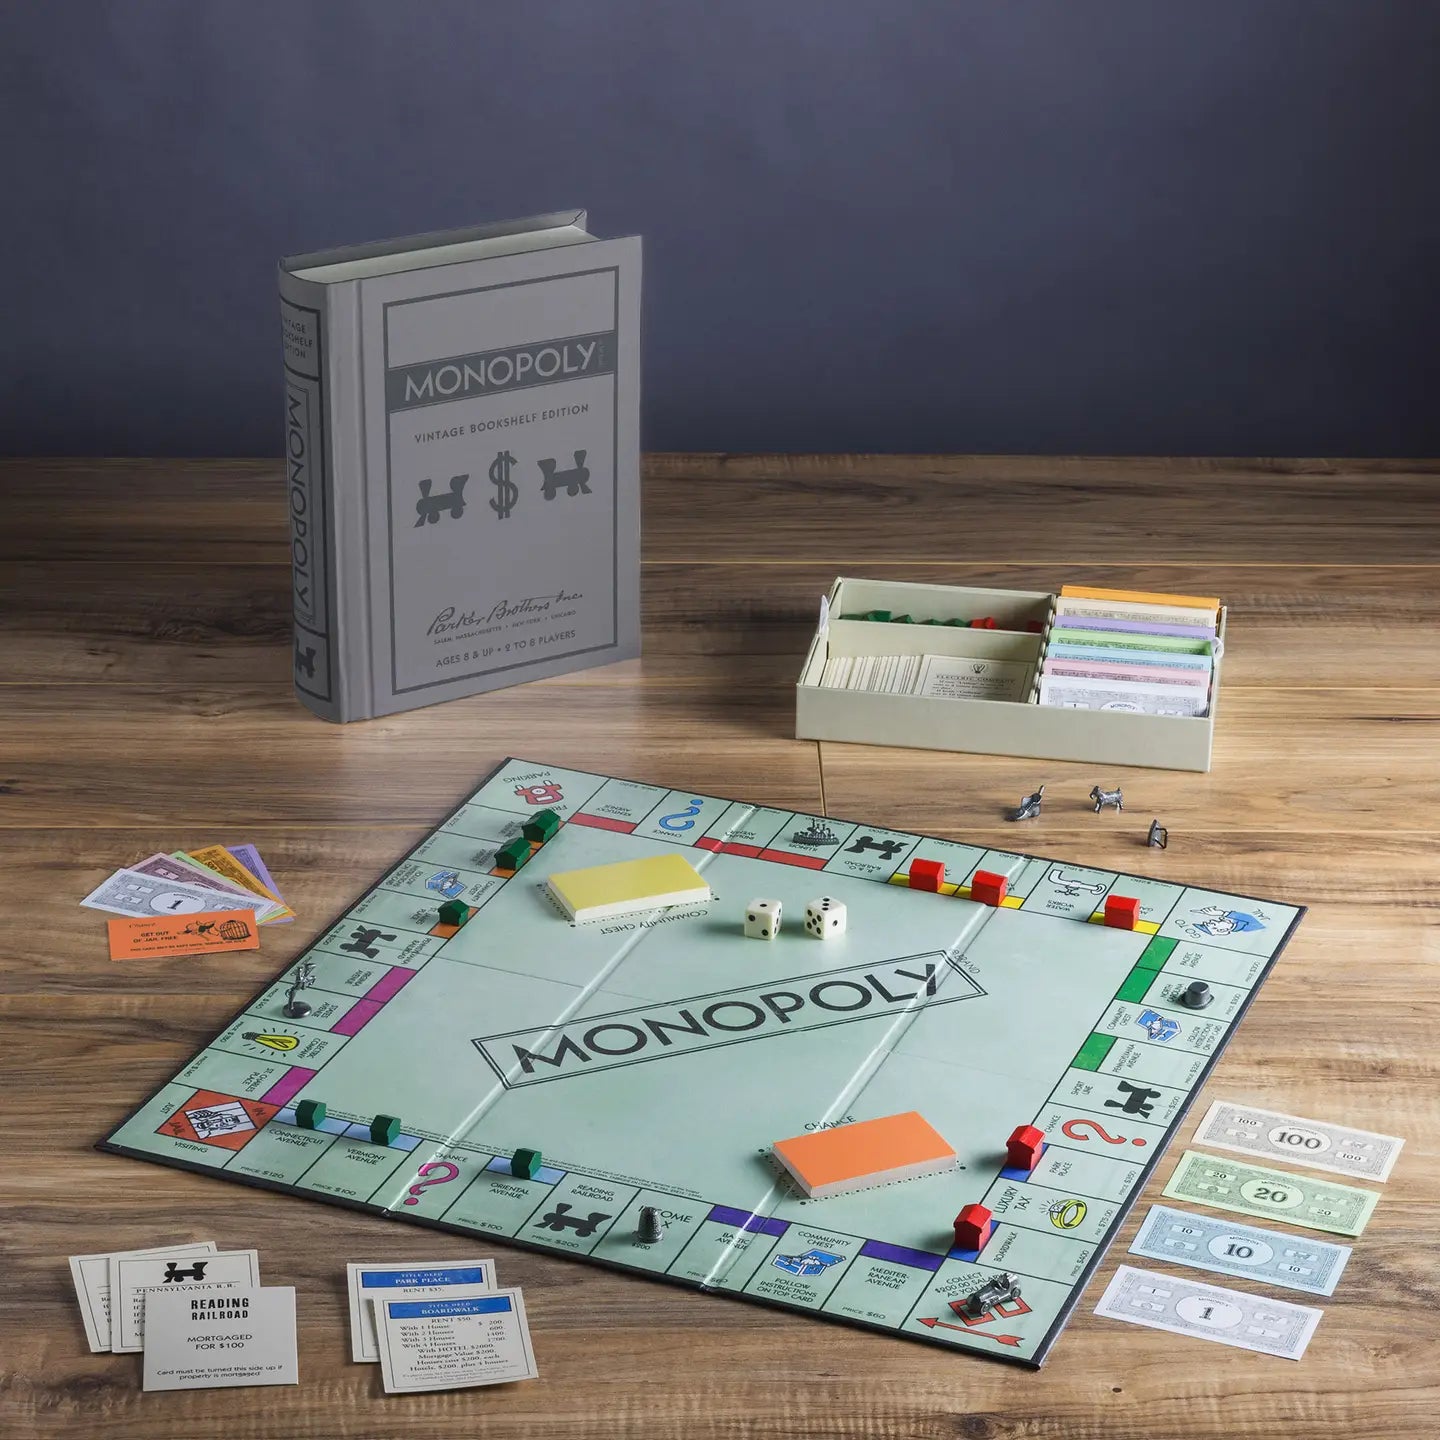 Monopoly Vintage Bookshelf Edition Game